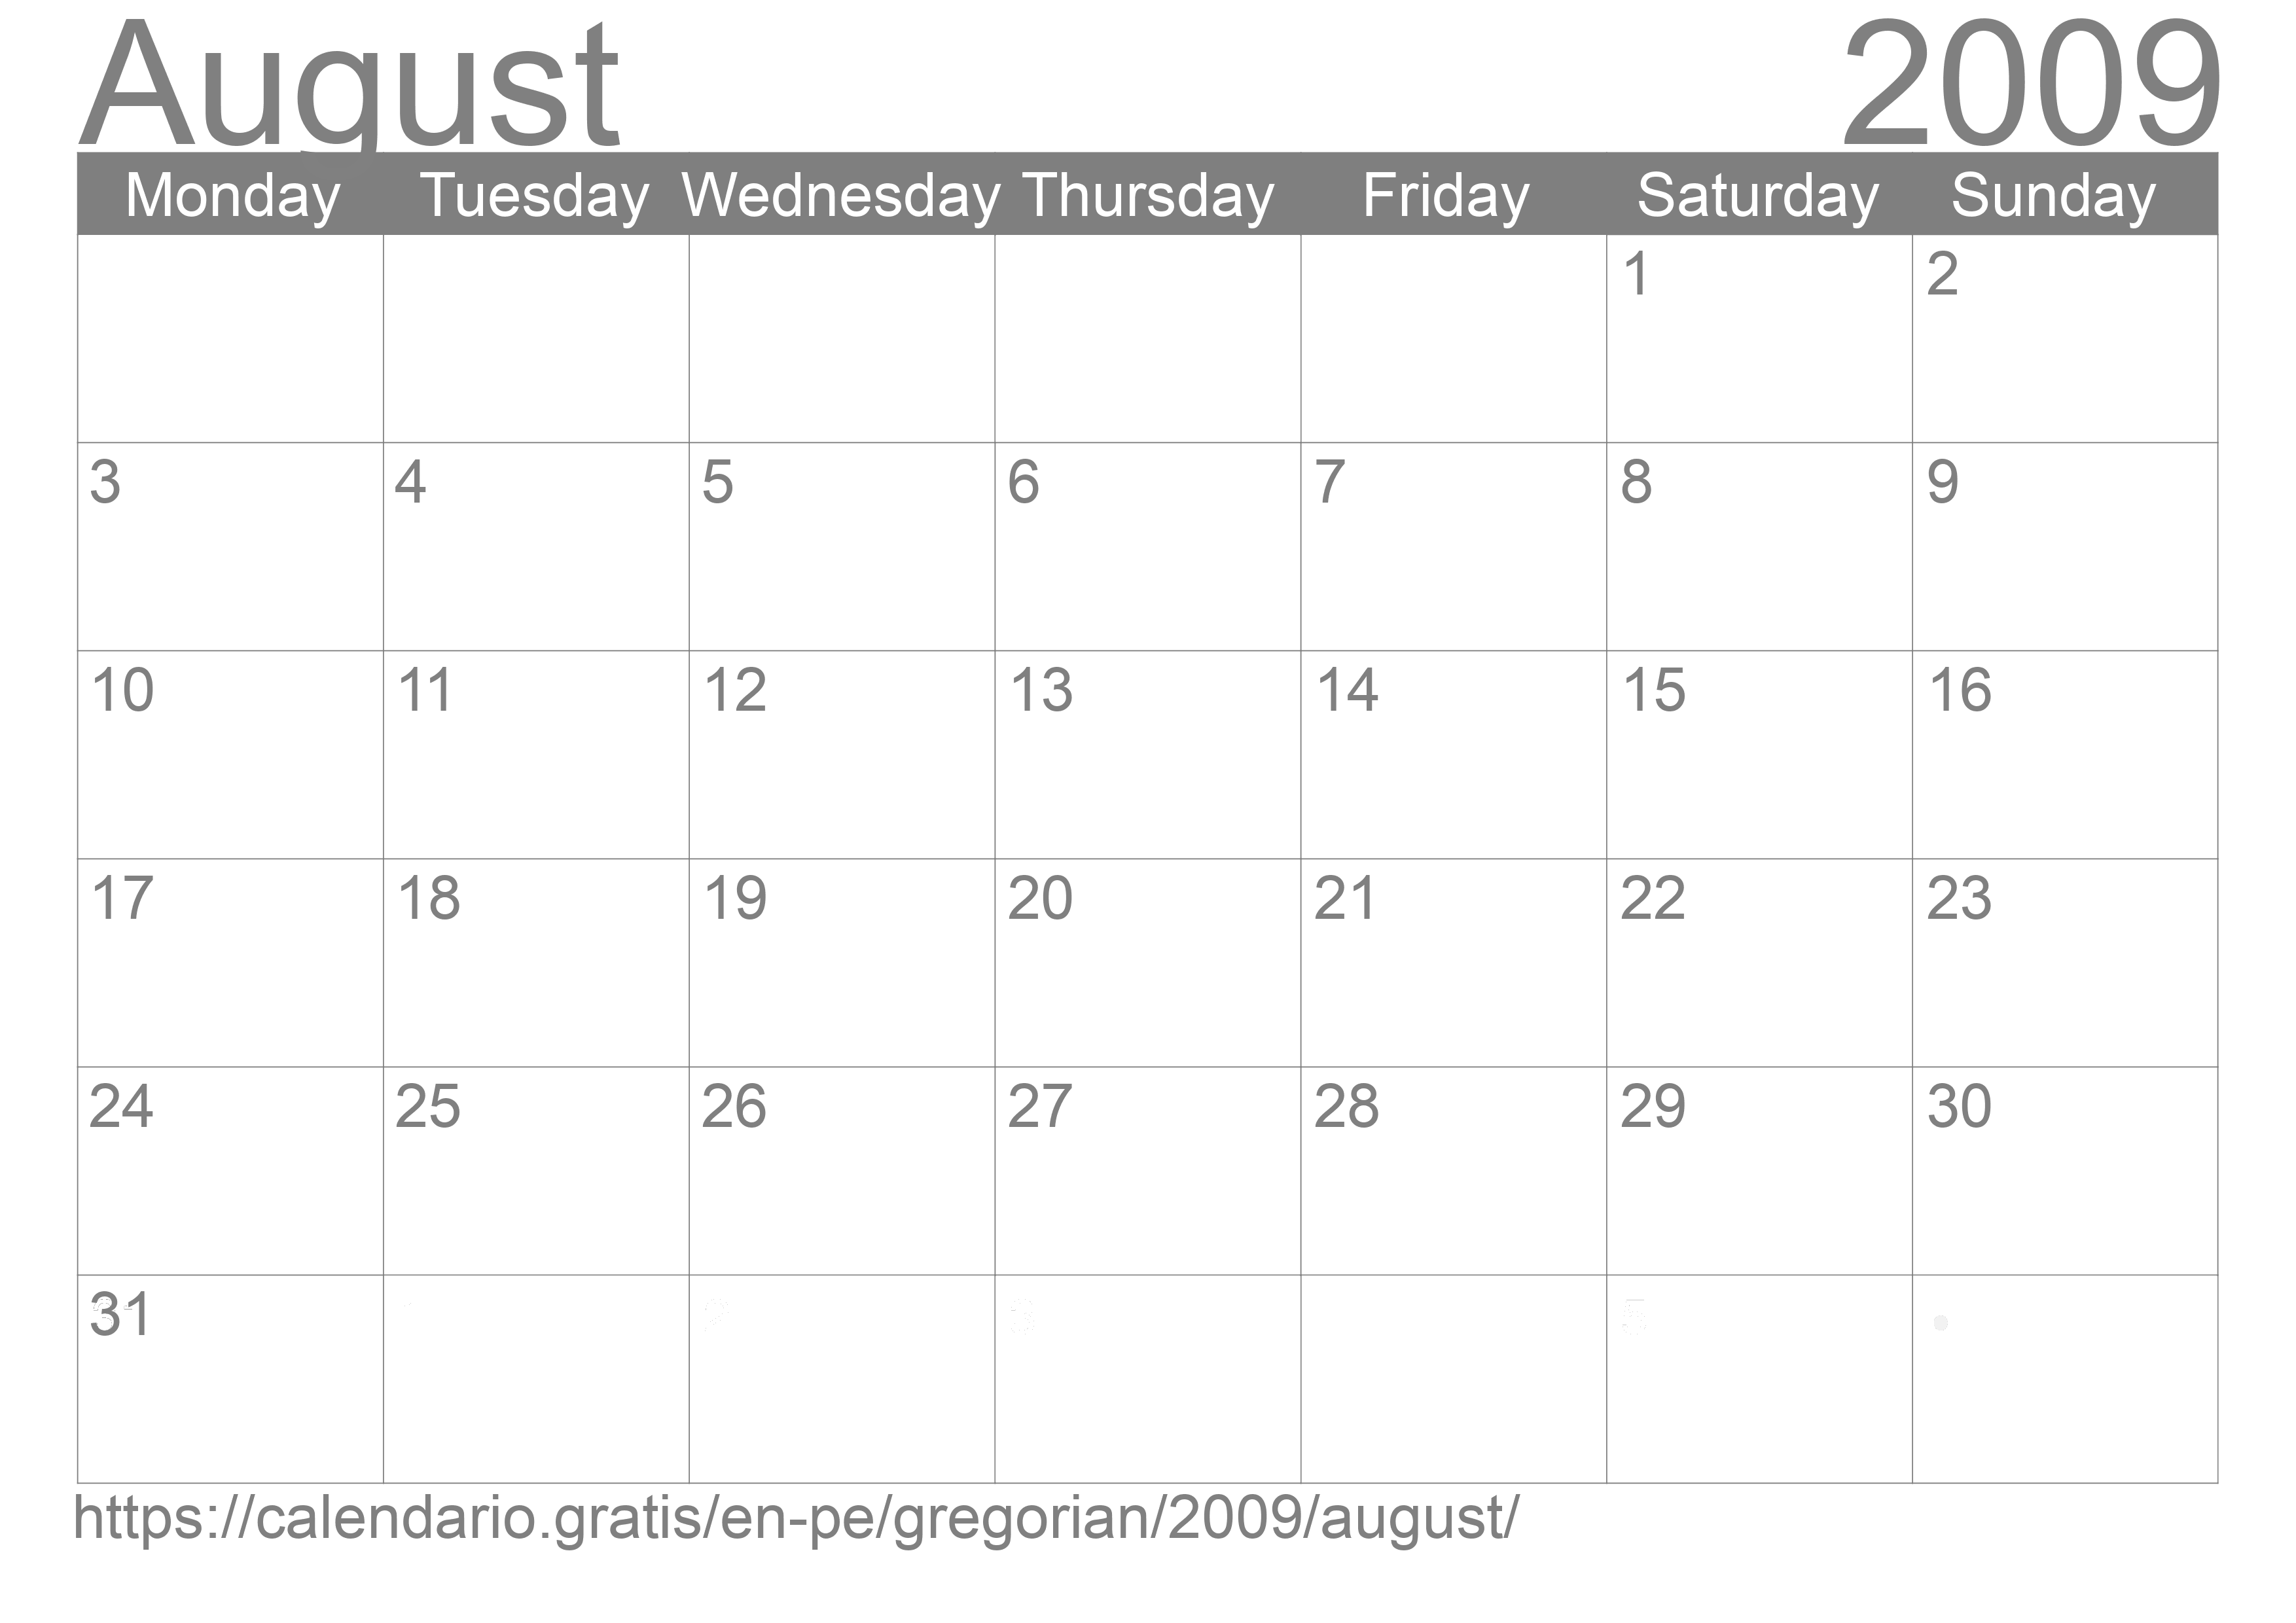 Calendar August 2009 to print